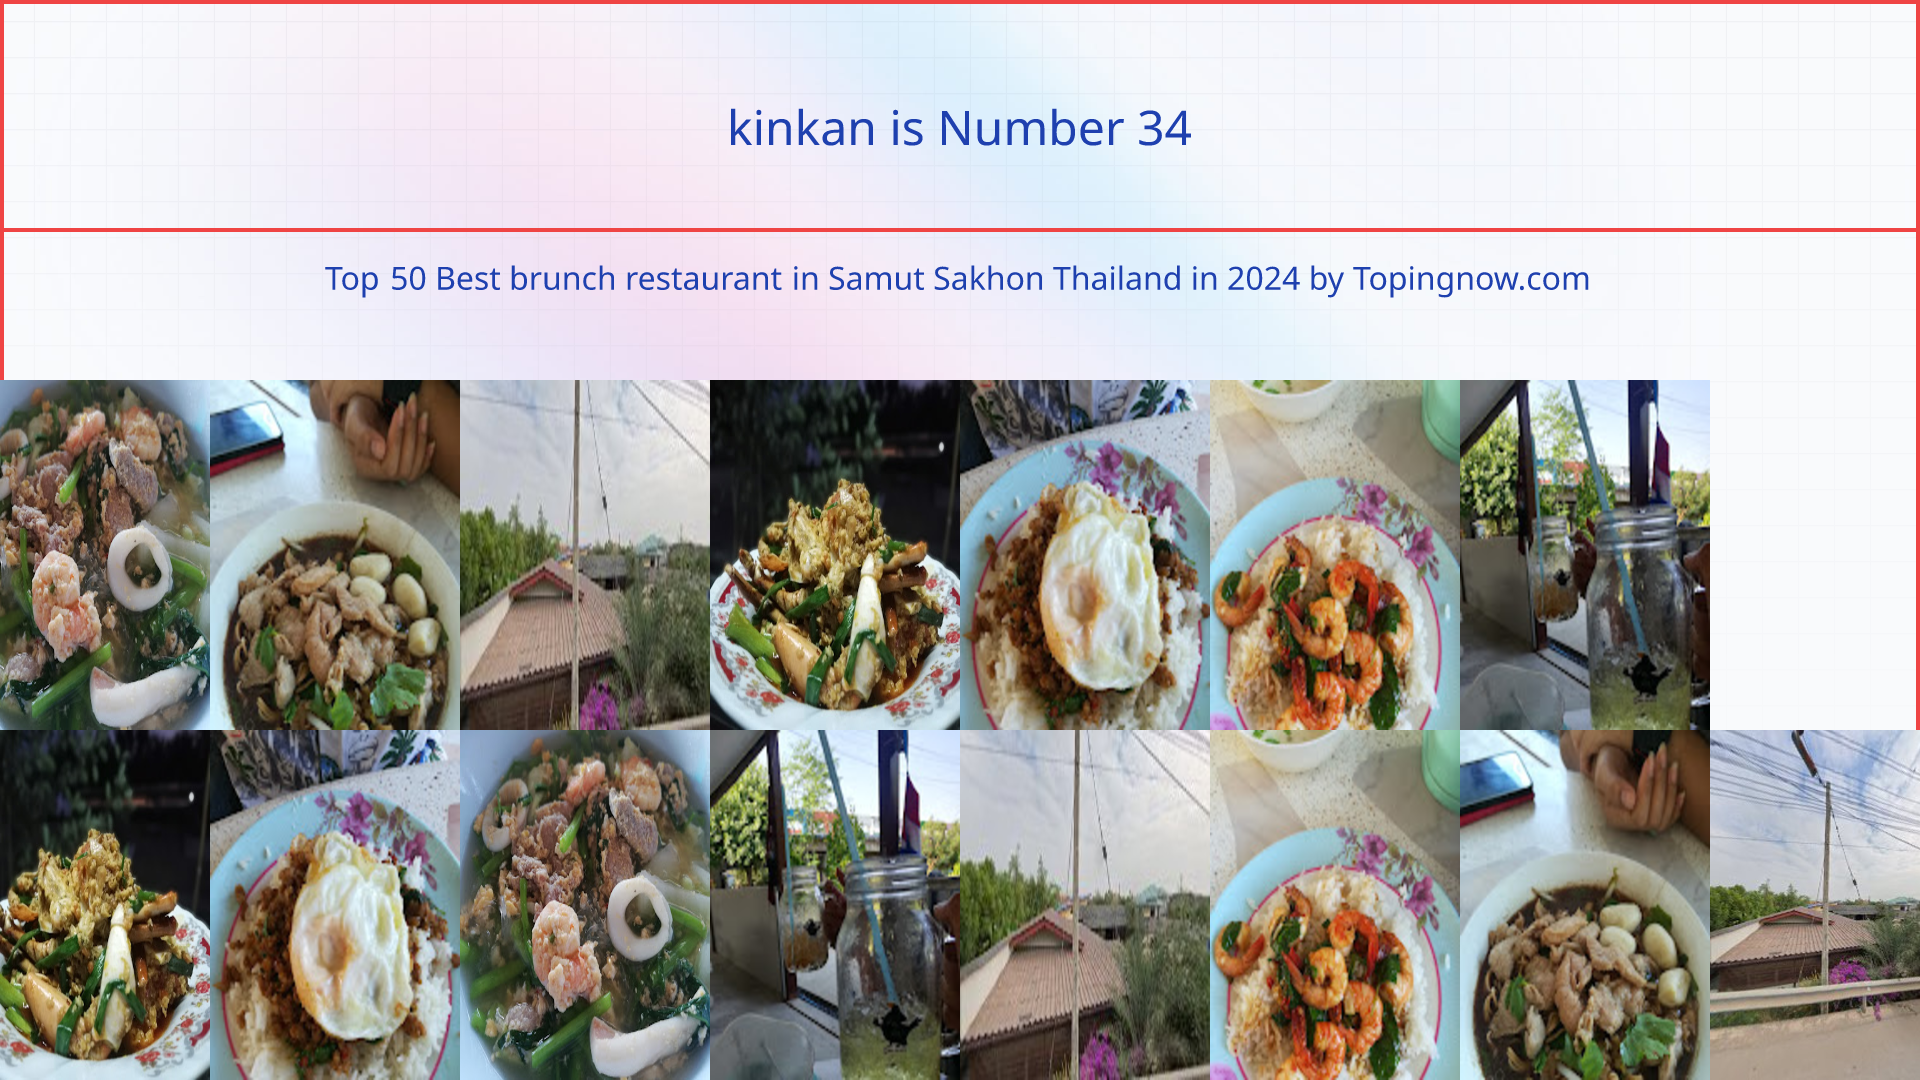 kinkan: Top 50 Best brunch restaurant in Samut Sakhon Thailand in 2024